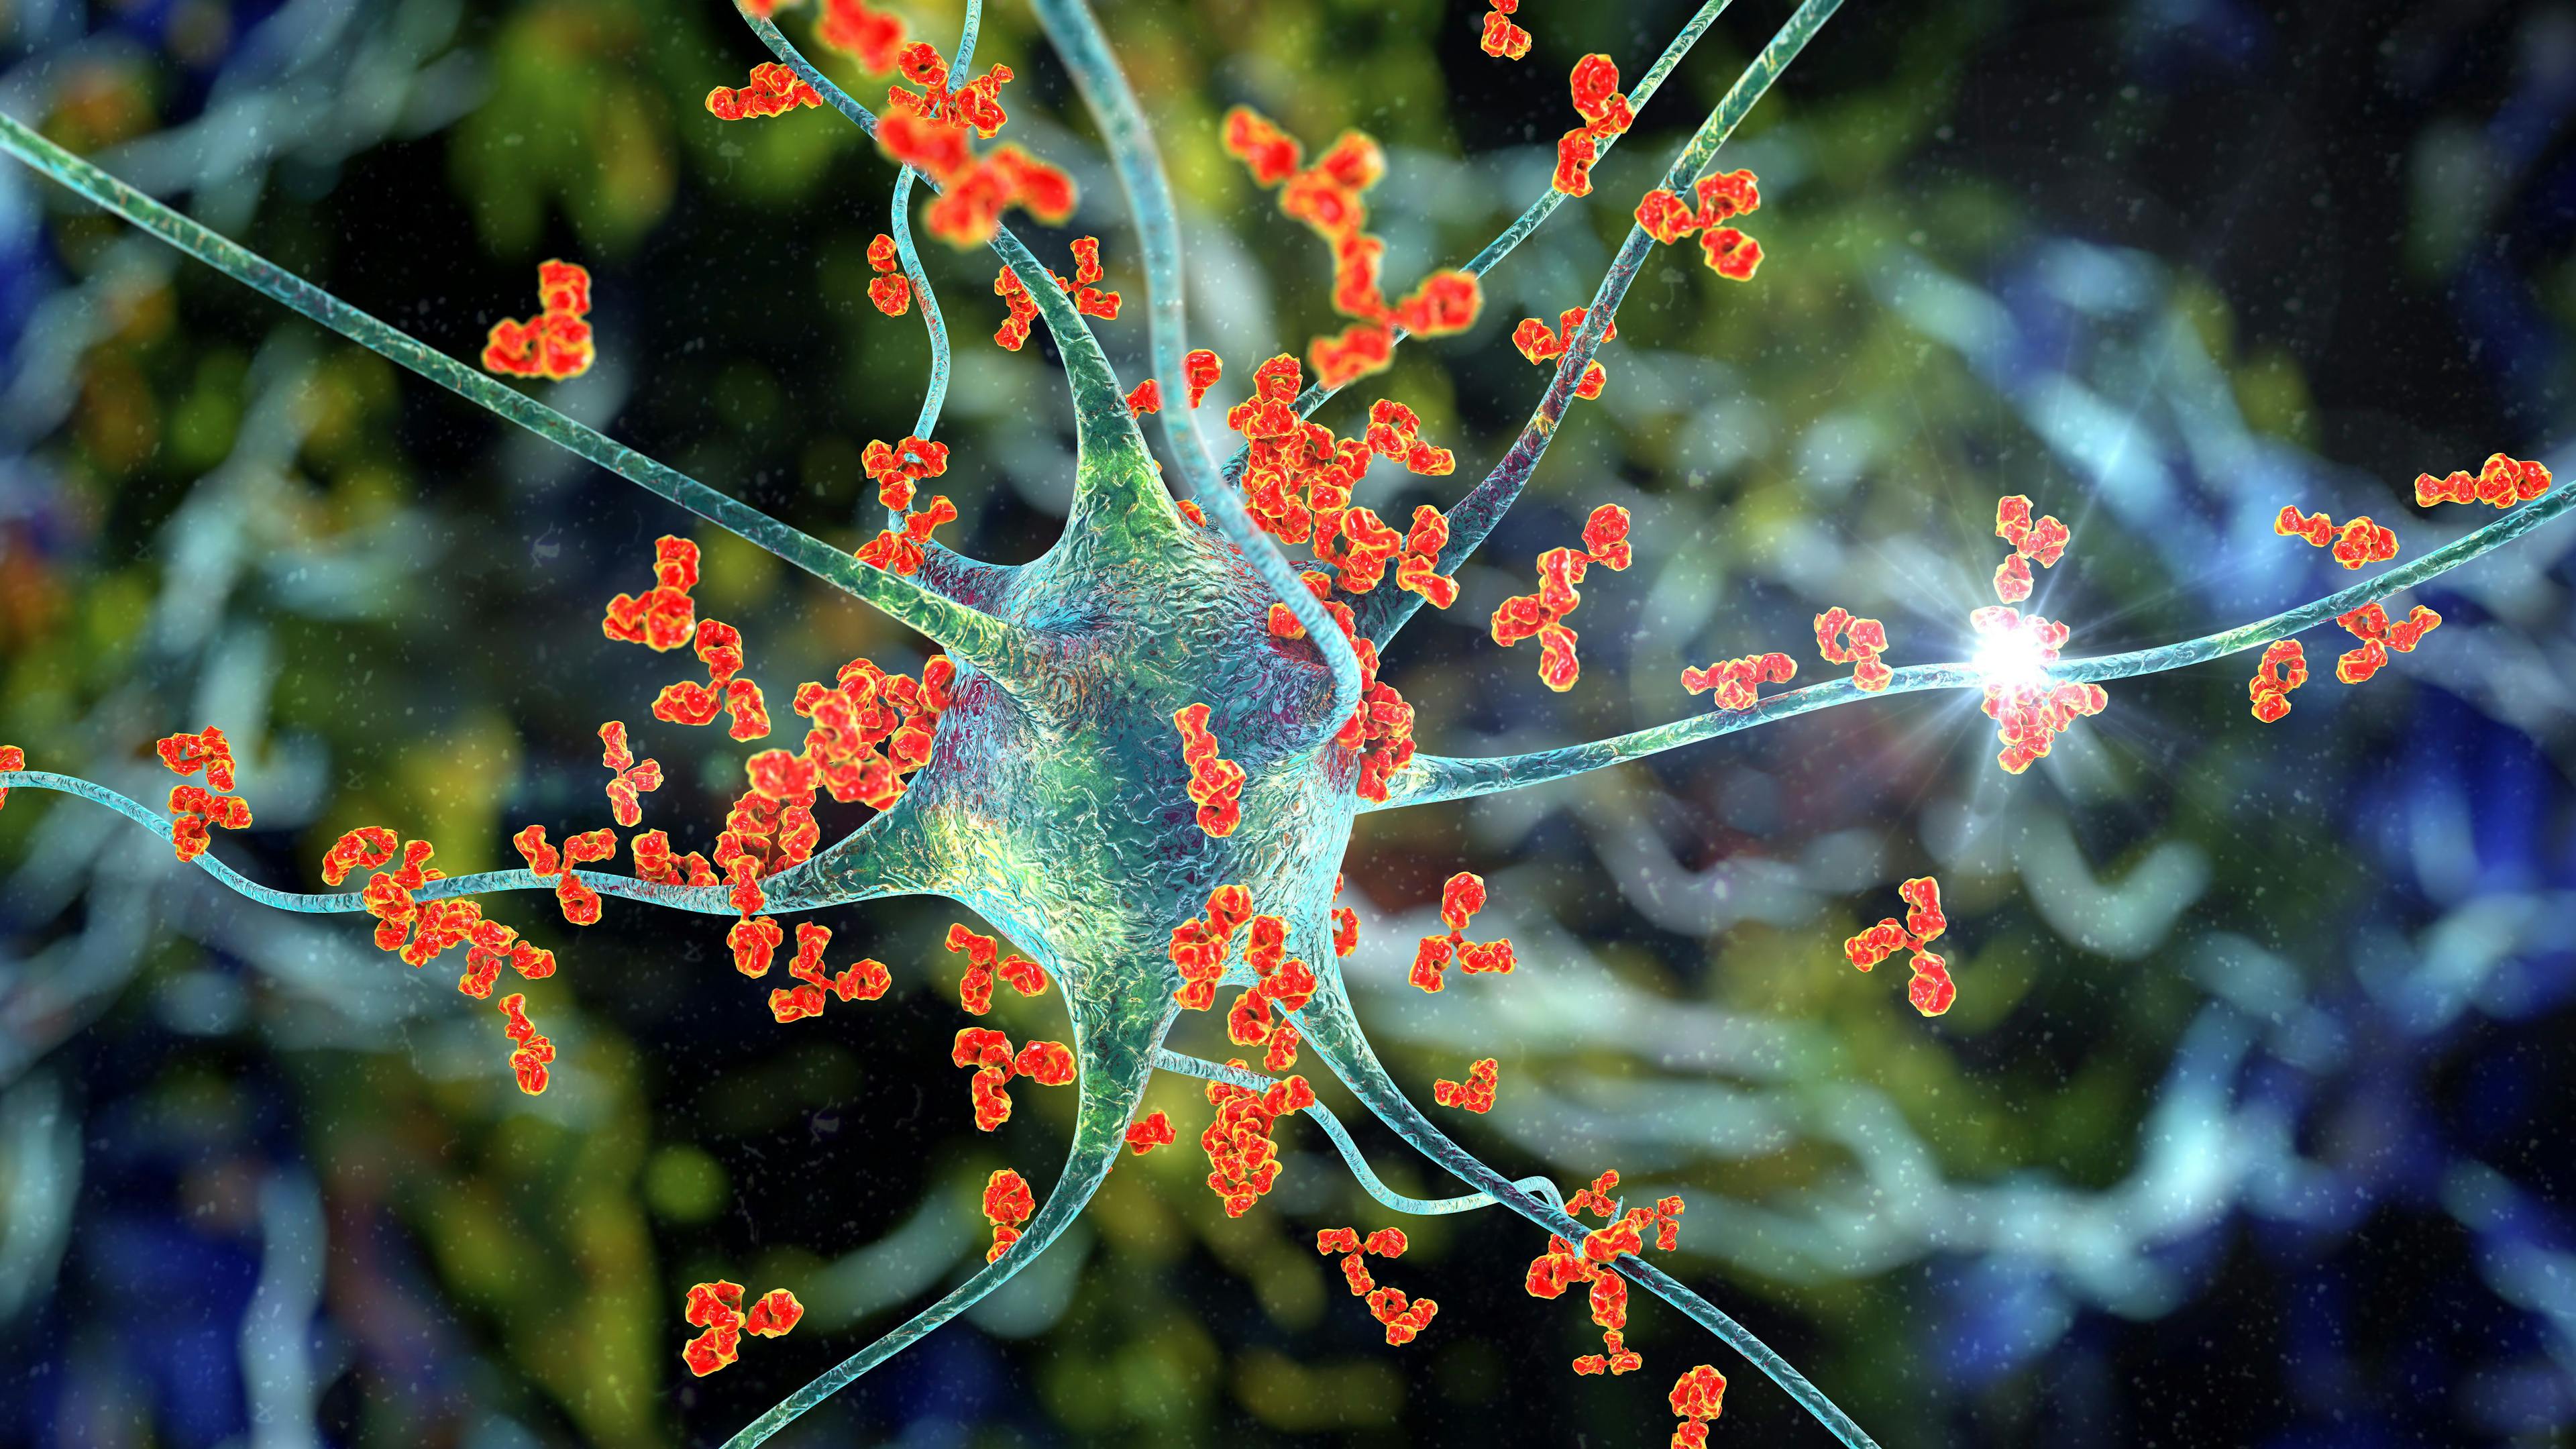 Antibodies attacking neuron - Image credit: Dr_Microbe | stock.adobe.com